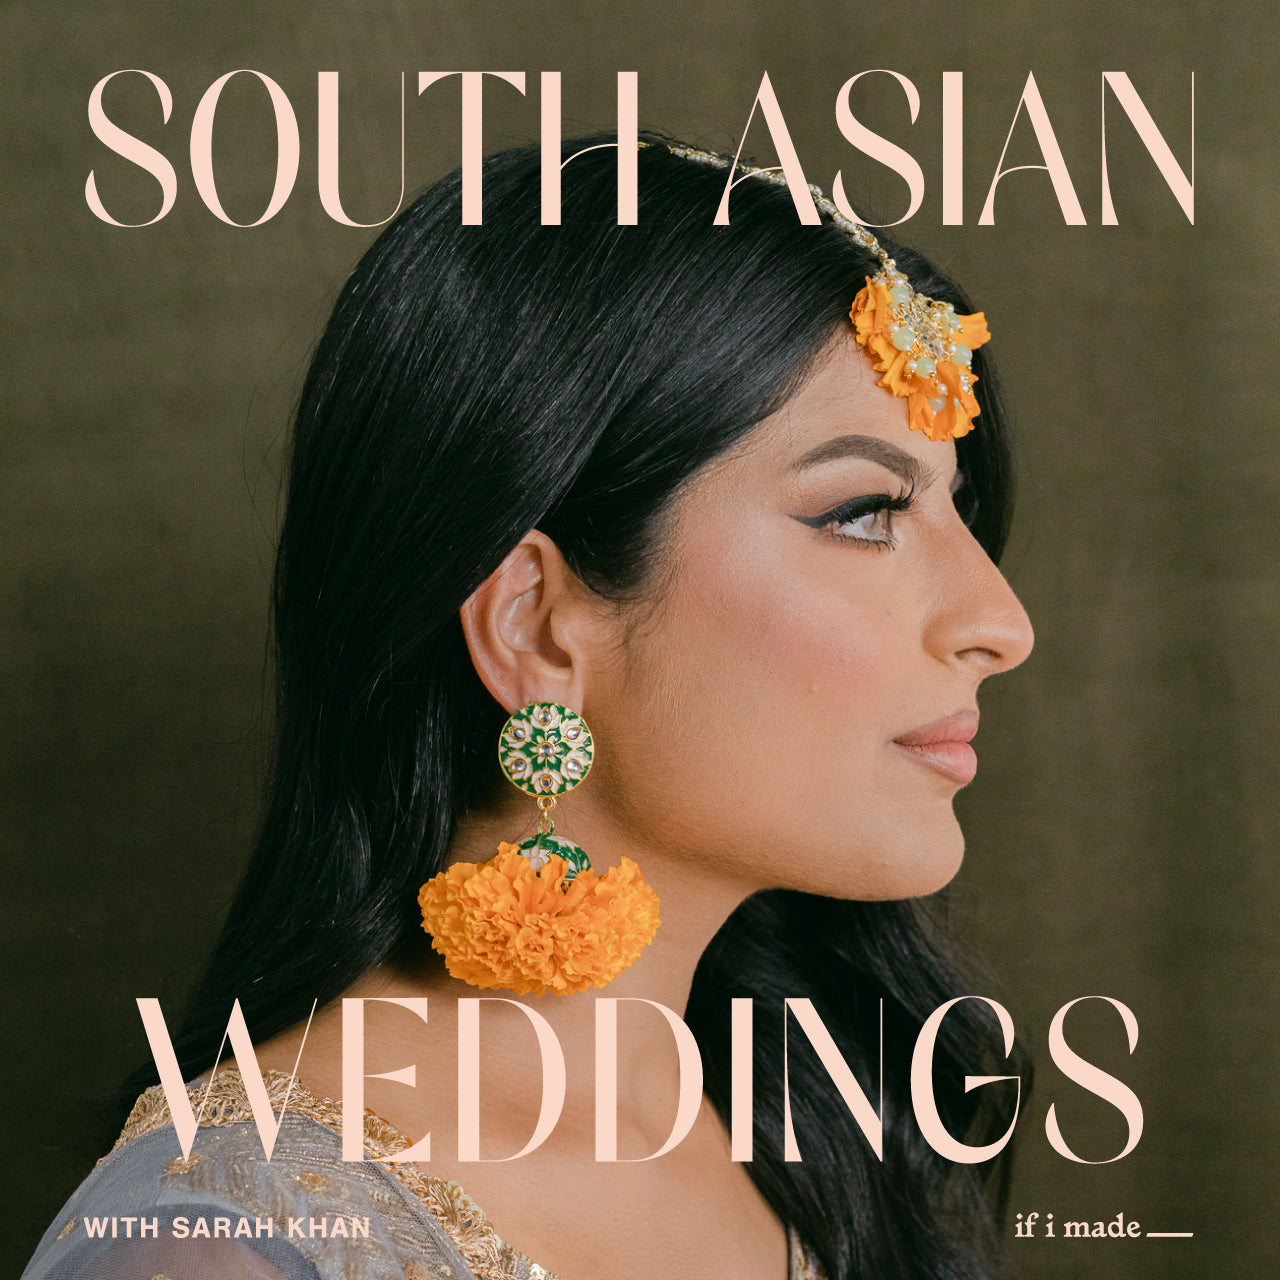 South Asian Weddings with Sarah Khan (ESPP) - 25 payments of $69